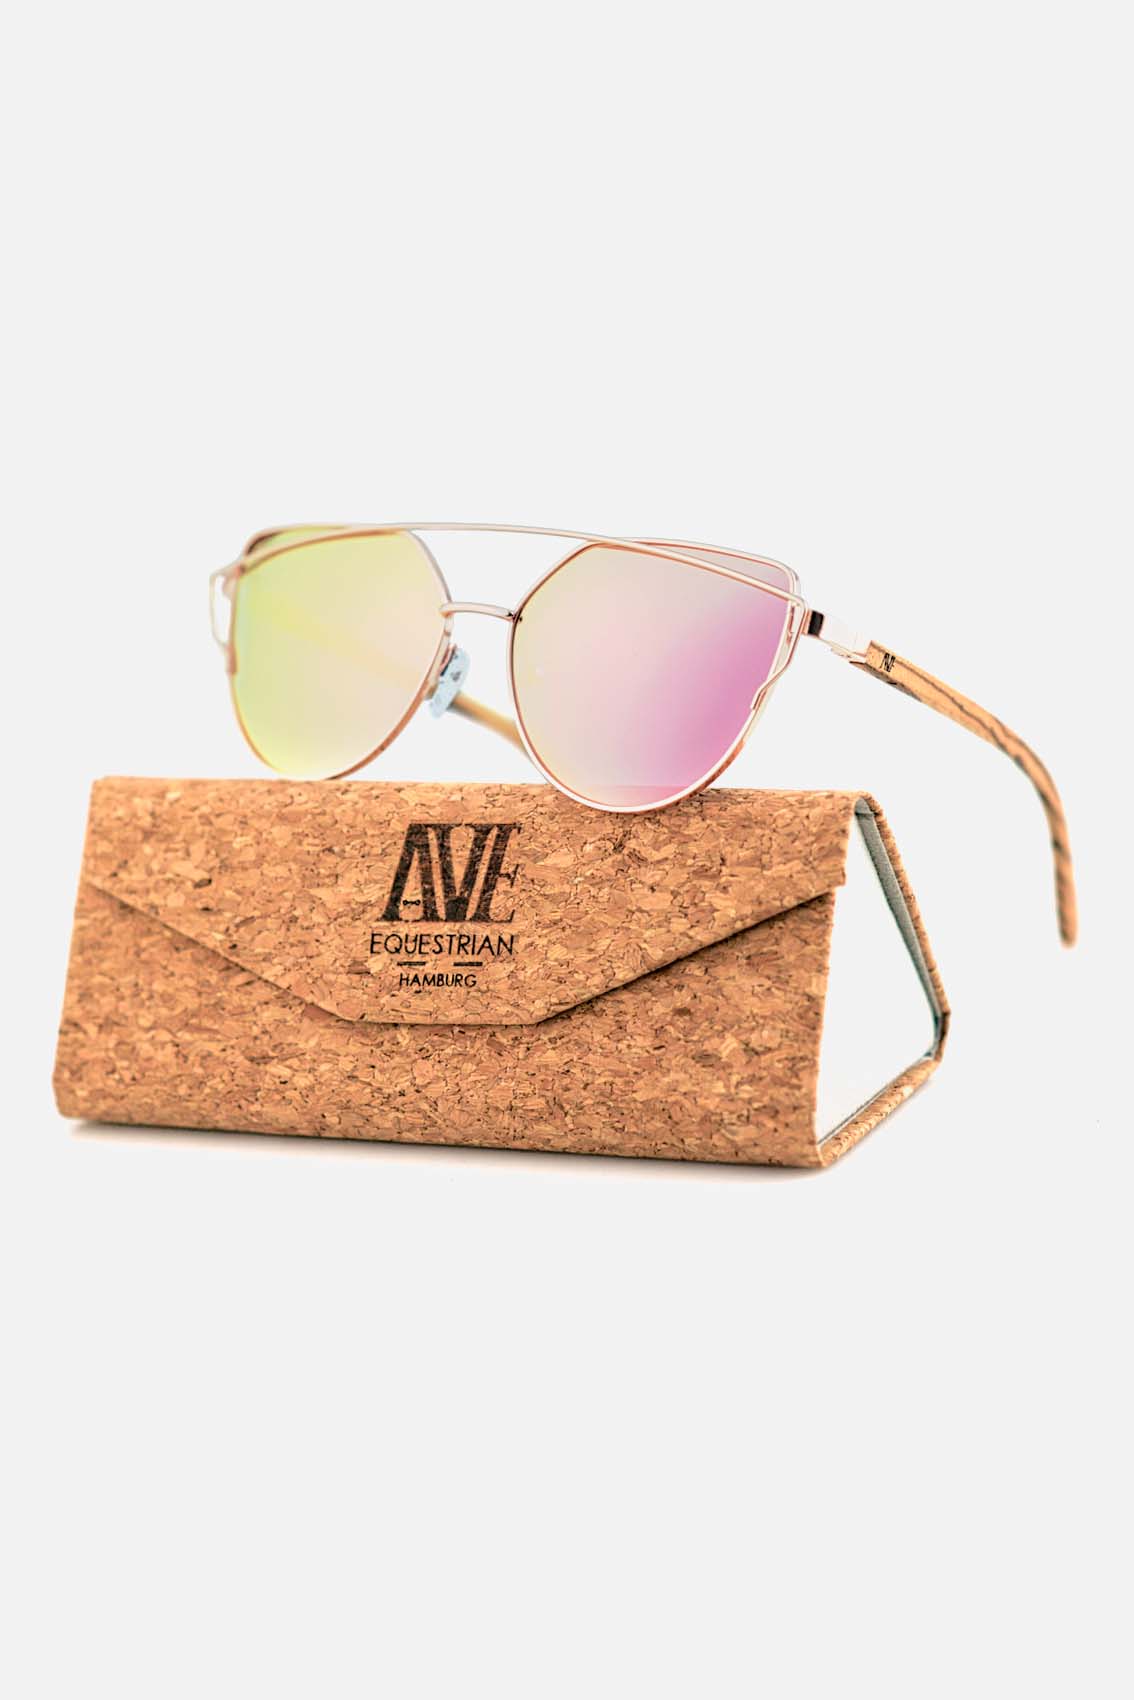 Gold edition sunglasses Women | AVE | Equestrian